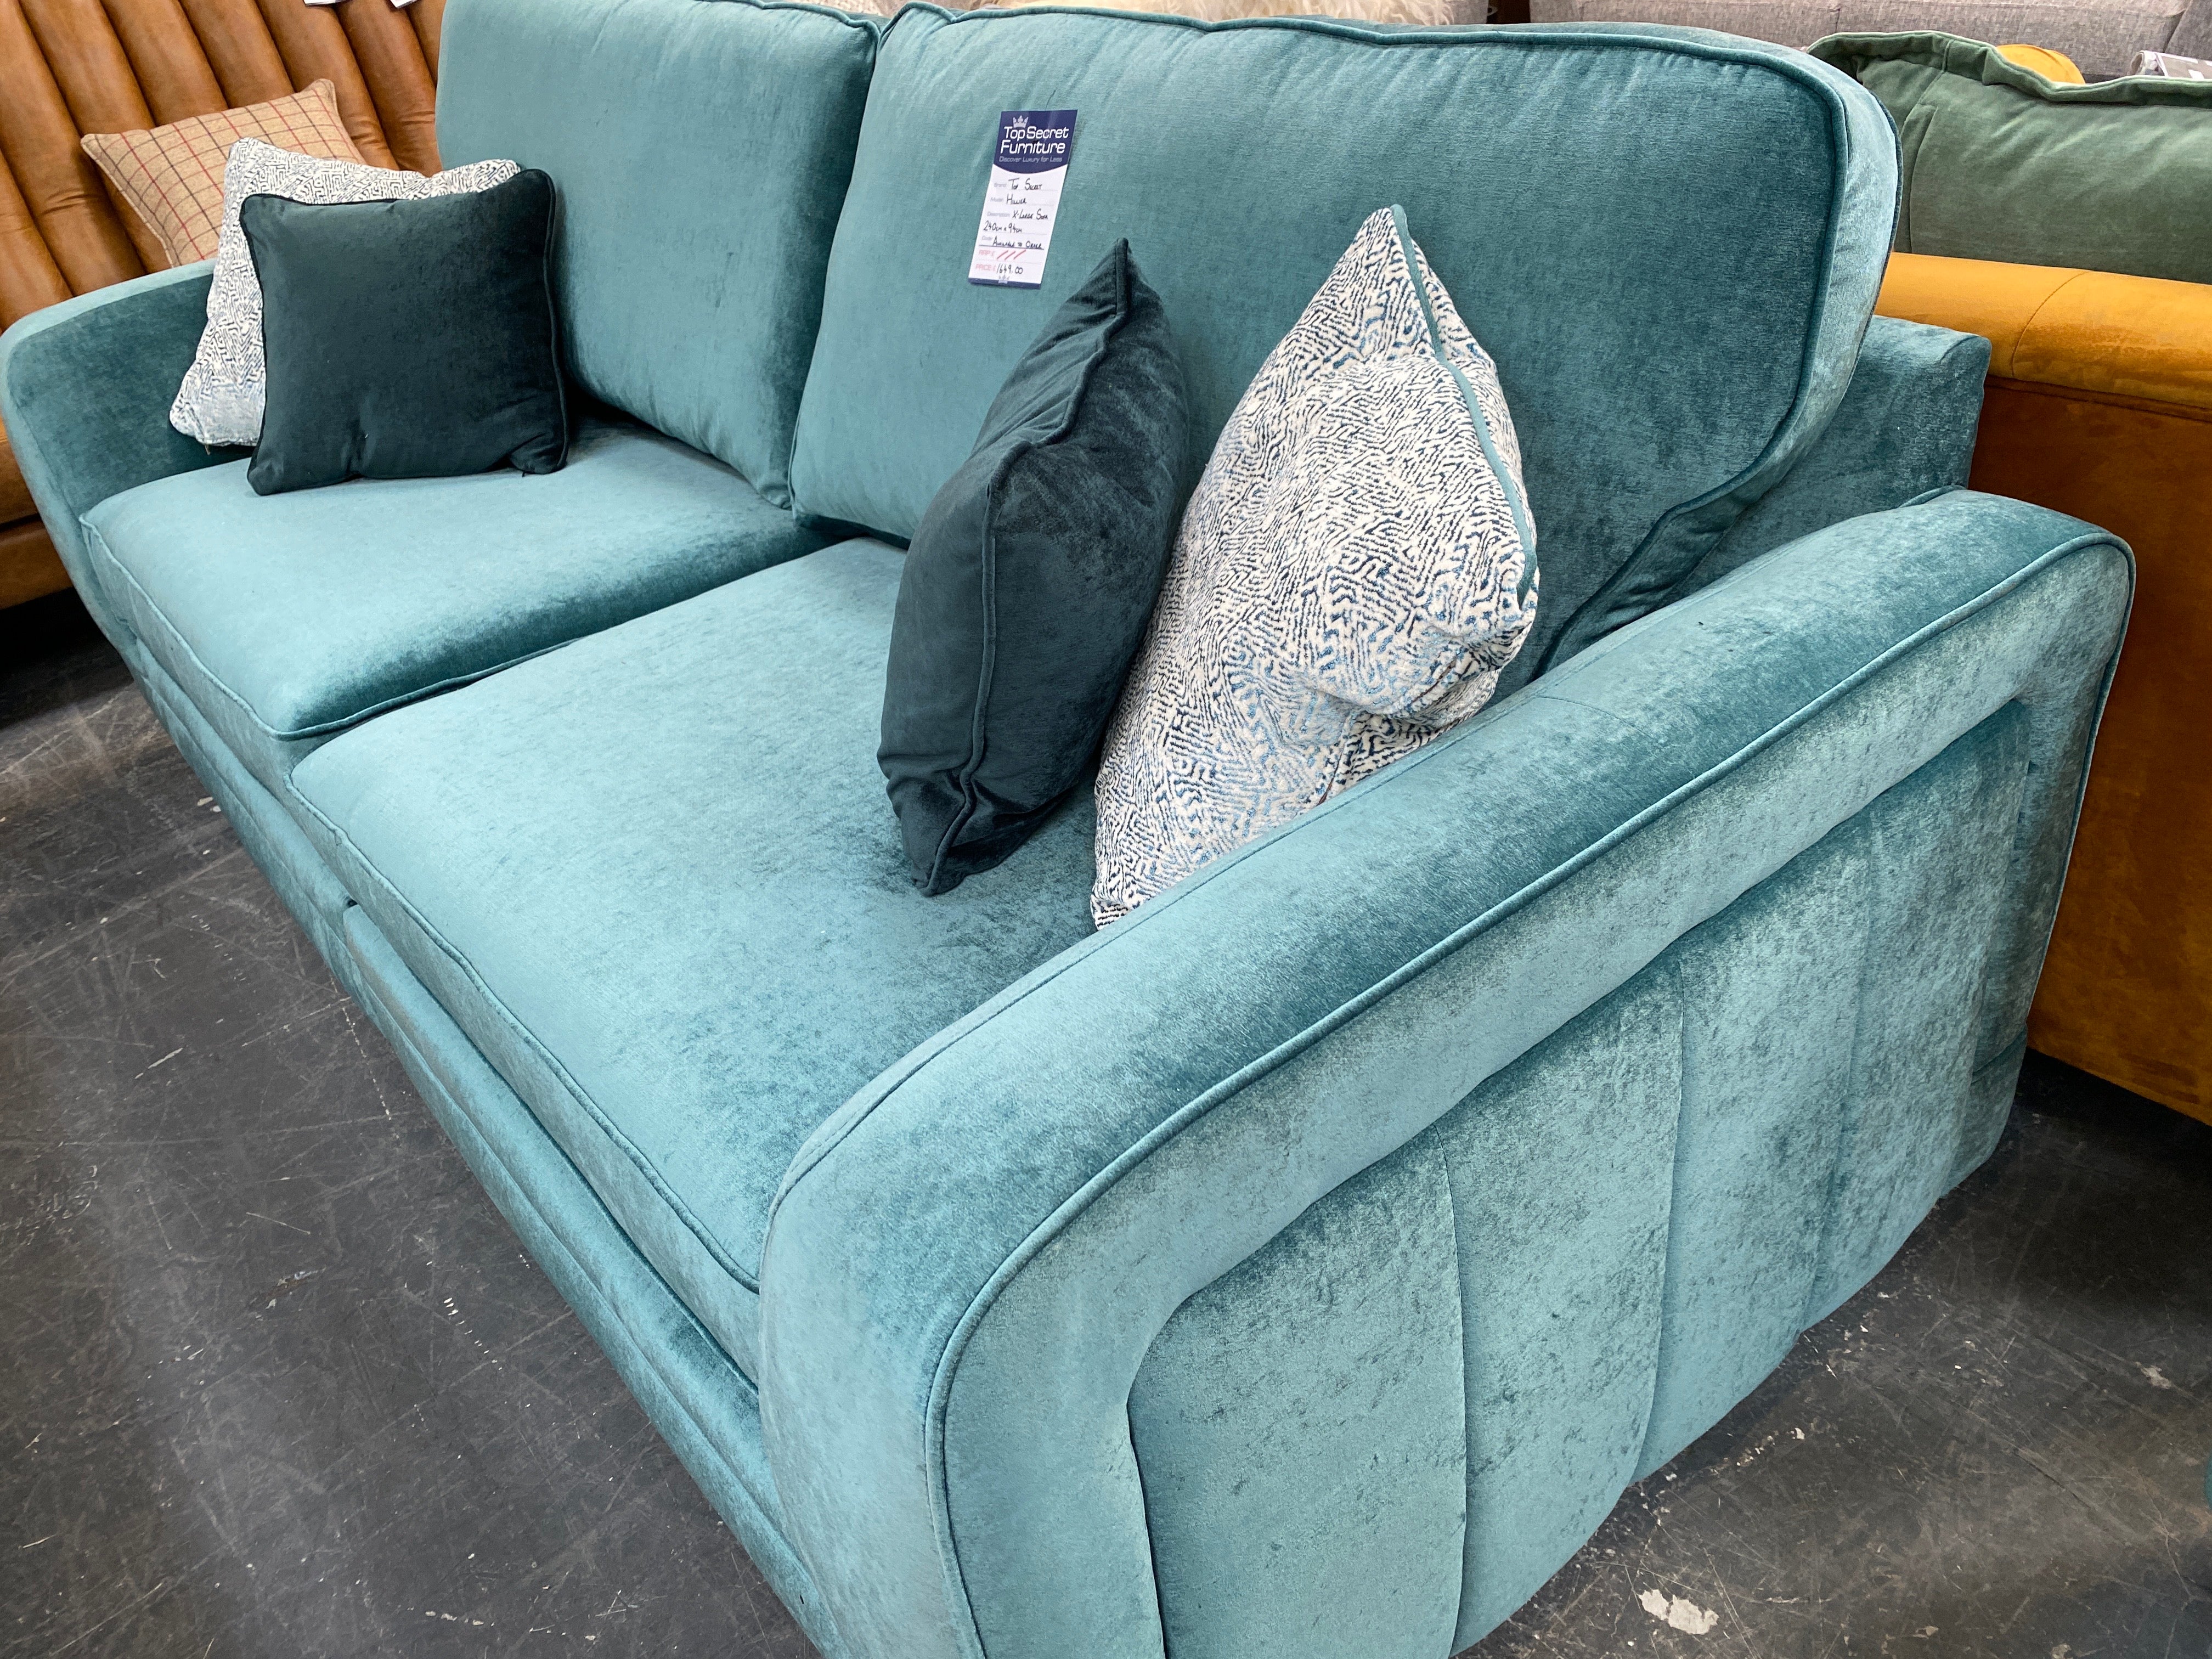 Hillier sofa range from Top Secret Furniture, Holmes Chapel.